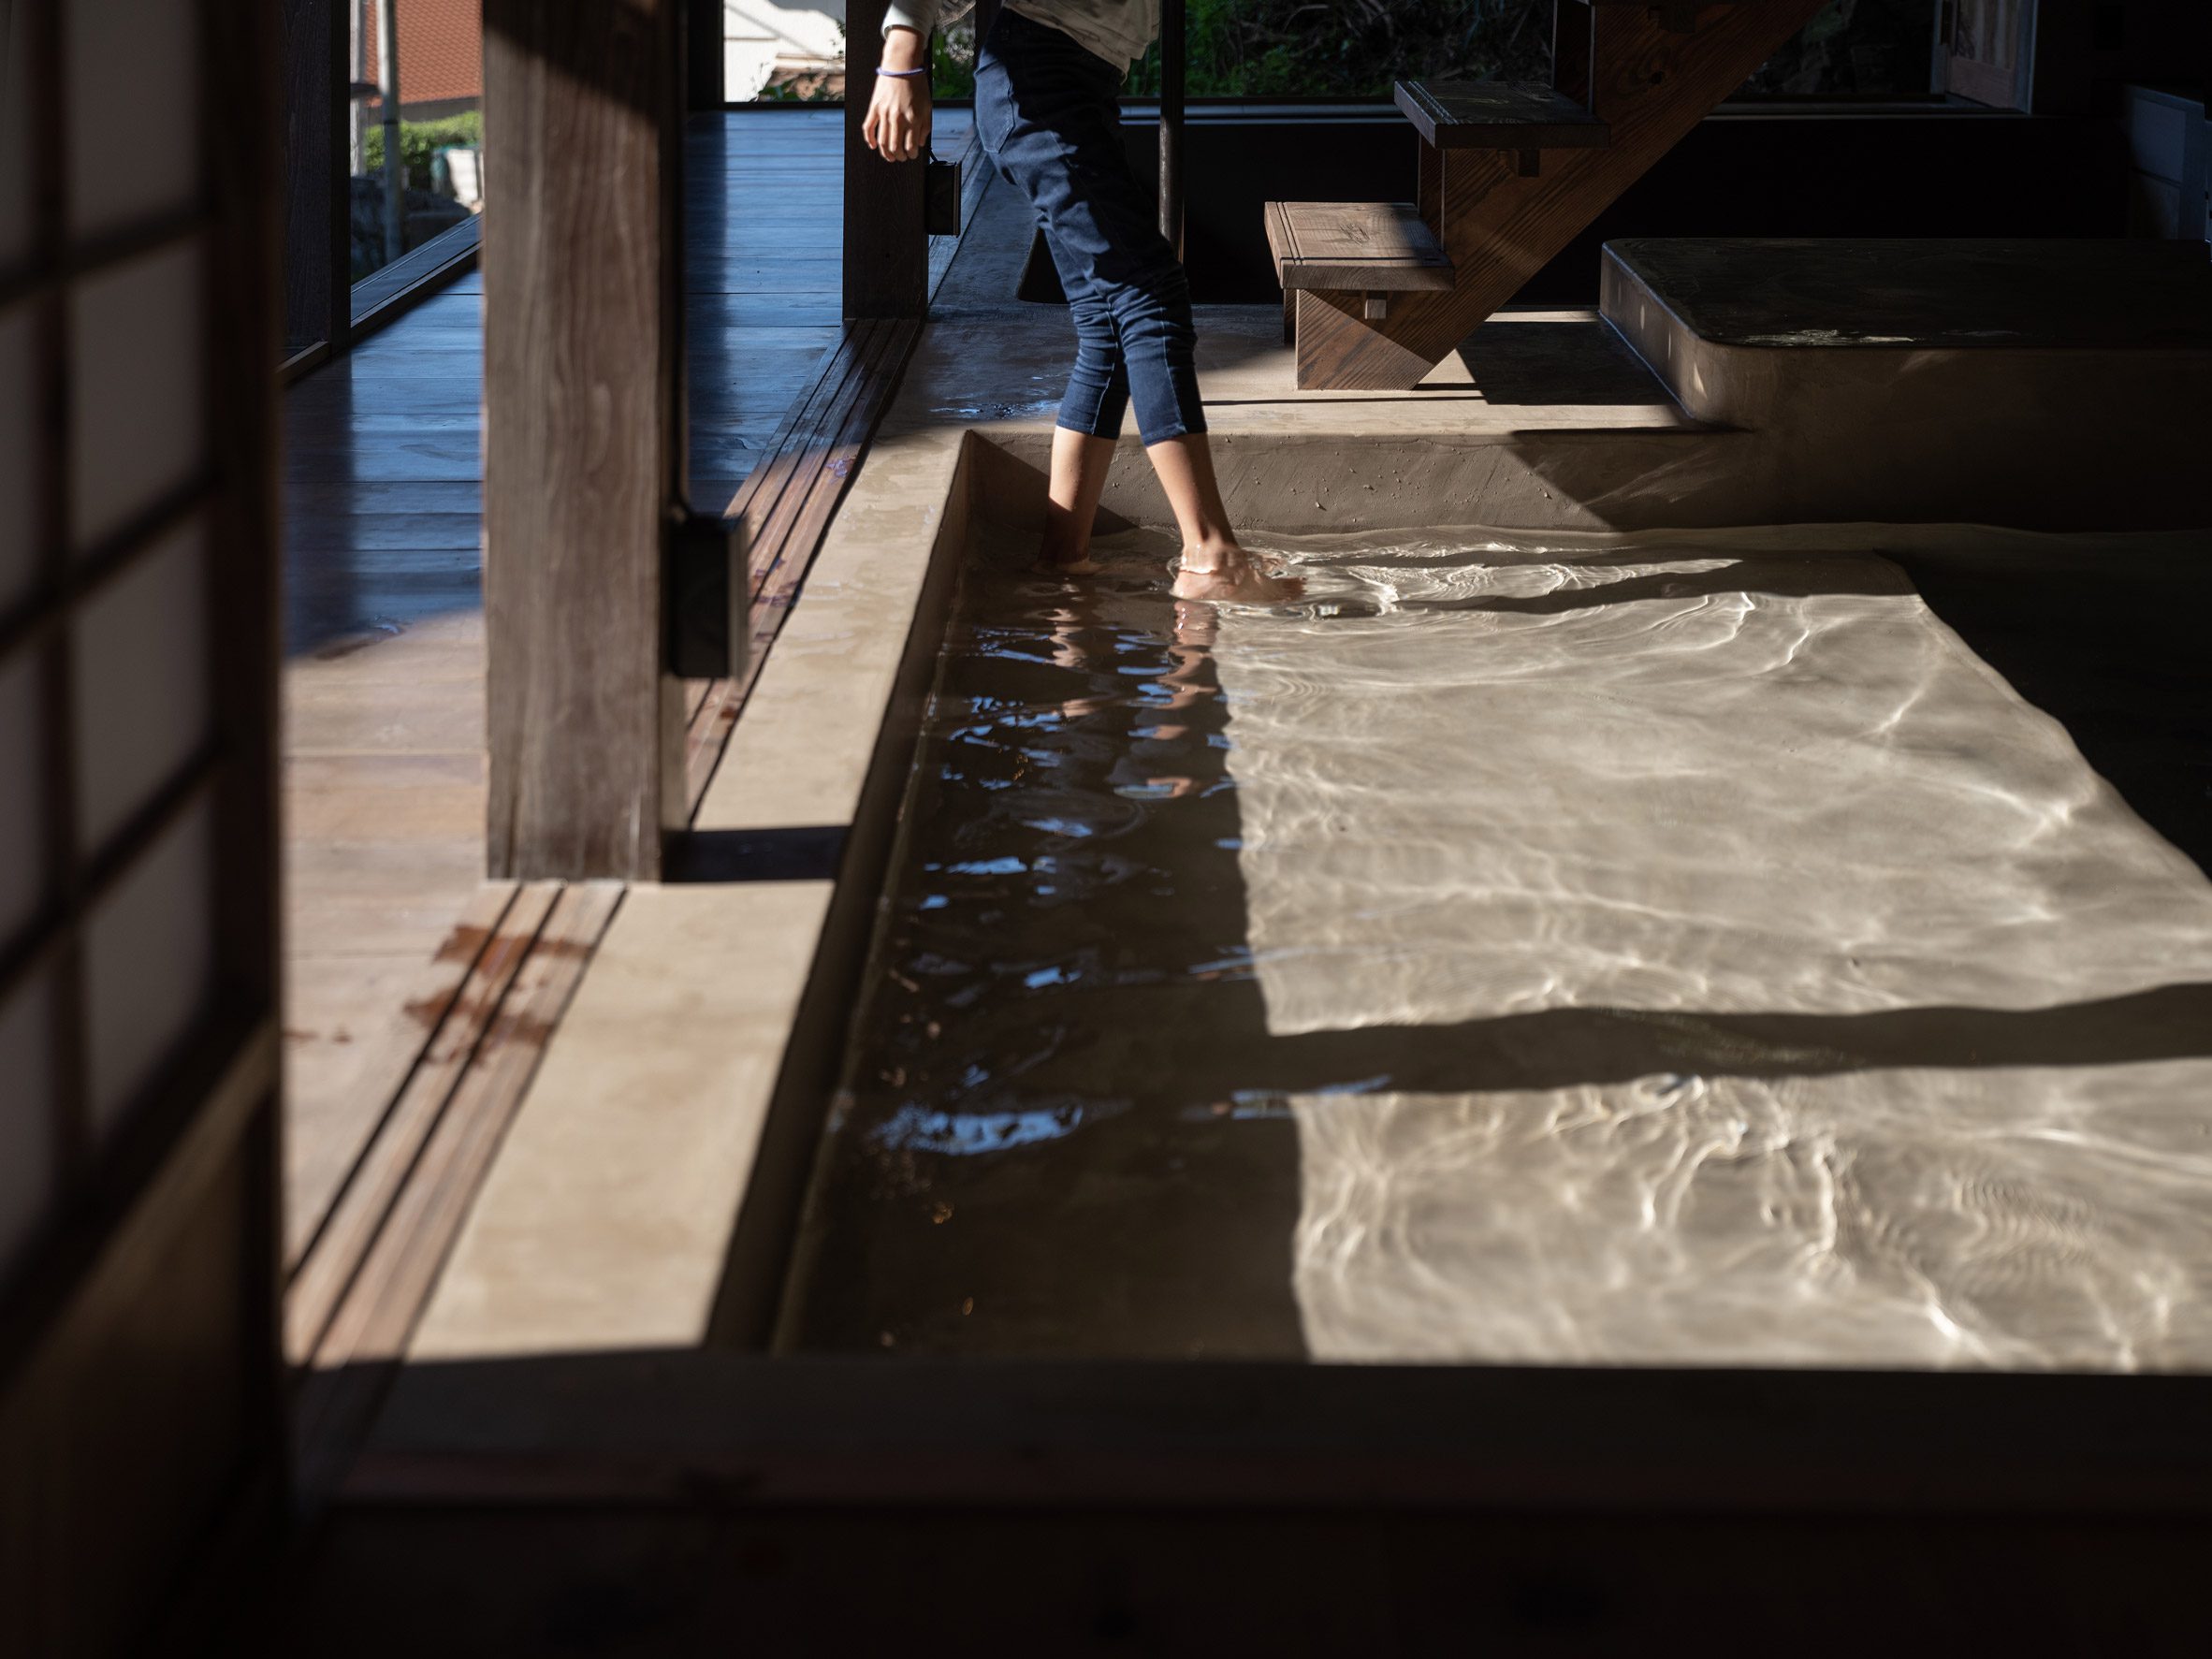 Footbath or pond in minimalist home in Misumi, Japan by Studio AMB